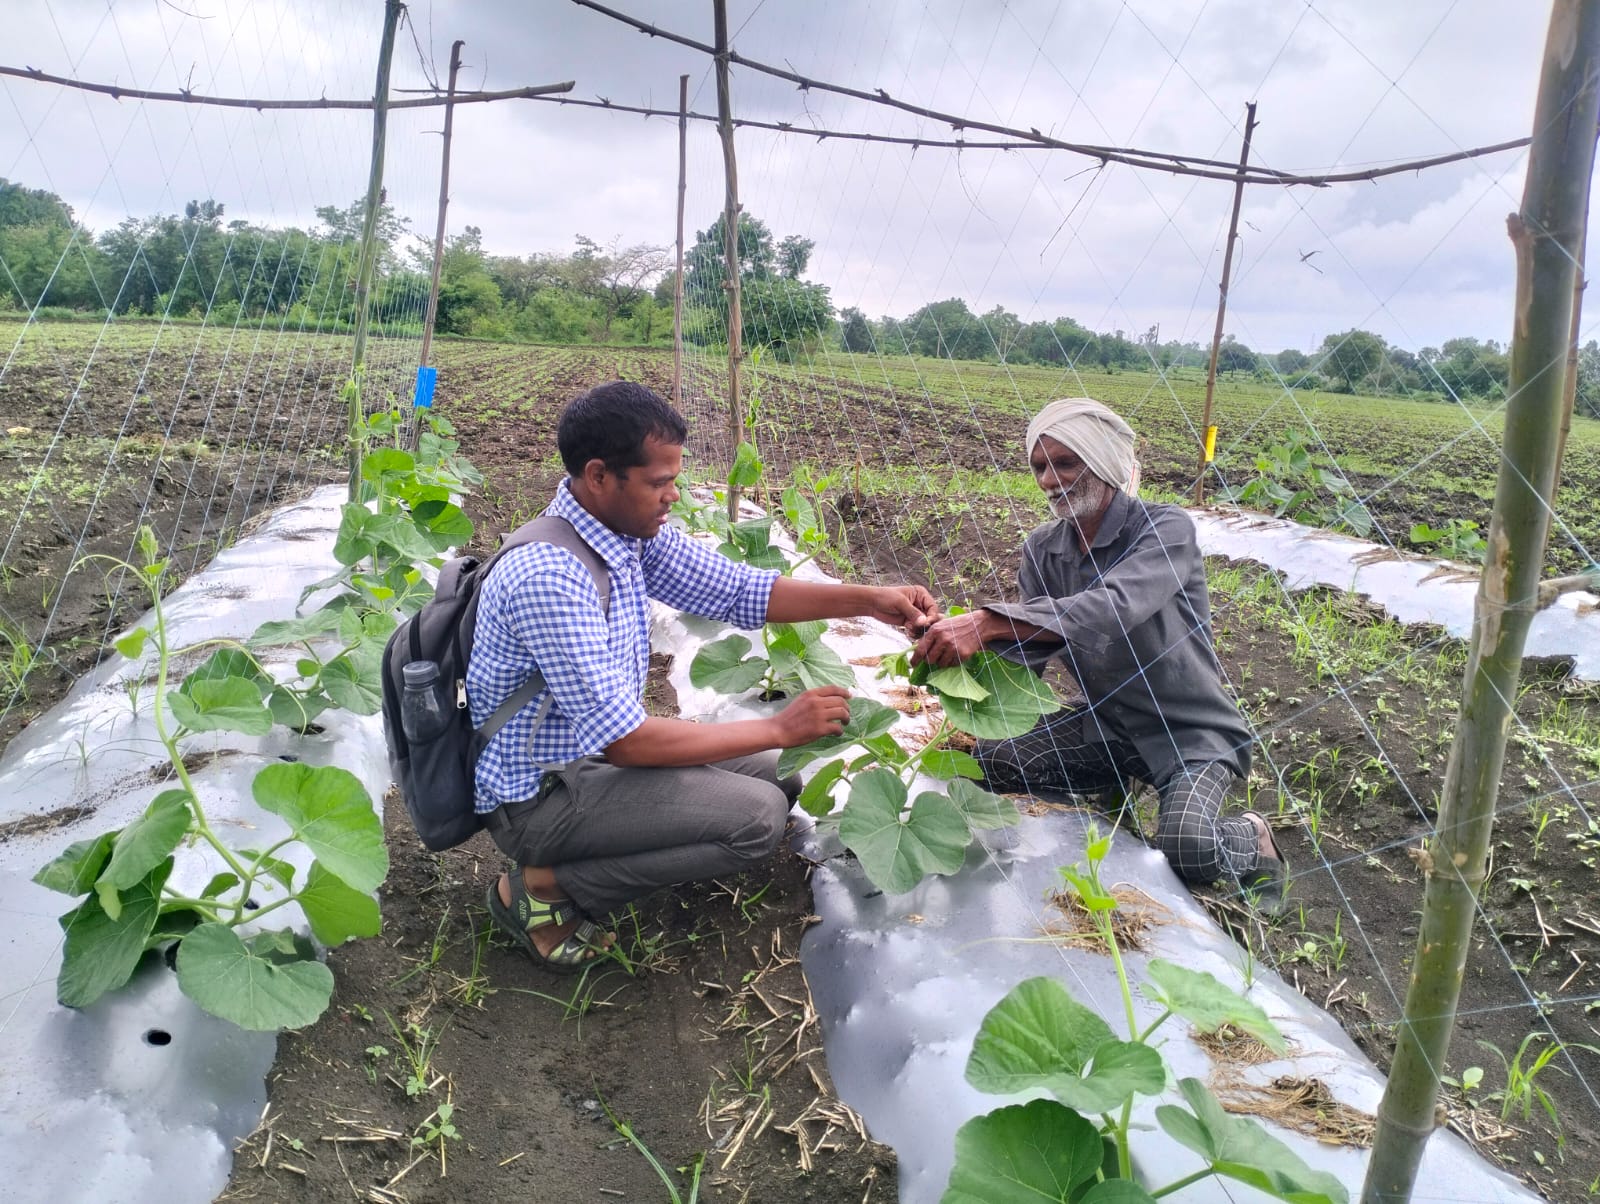 EWS-KT staff and older farmer adjust trellising around a plant